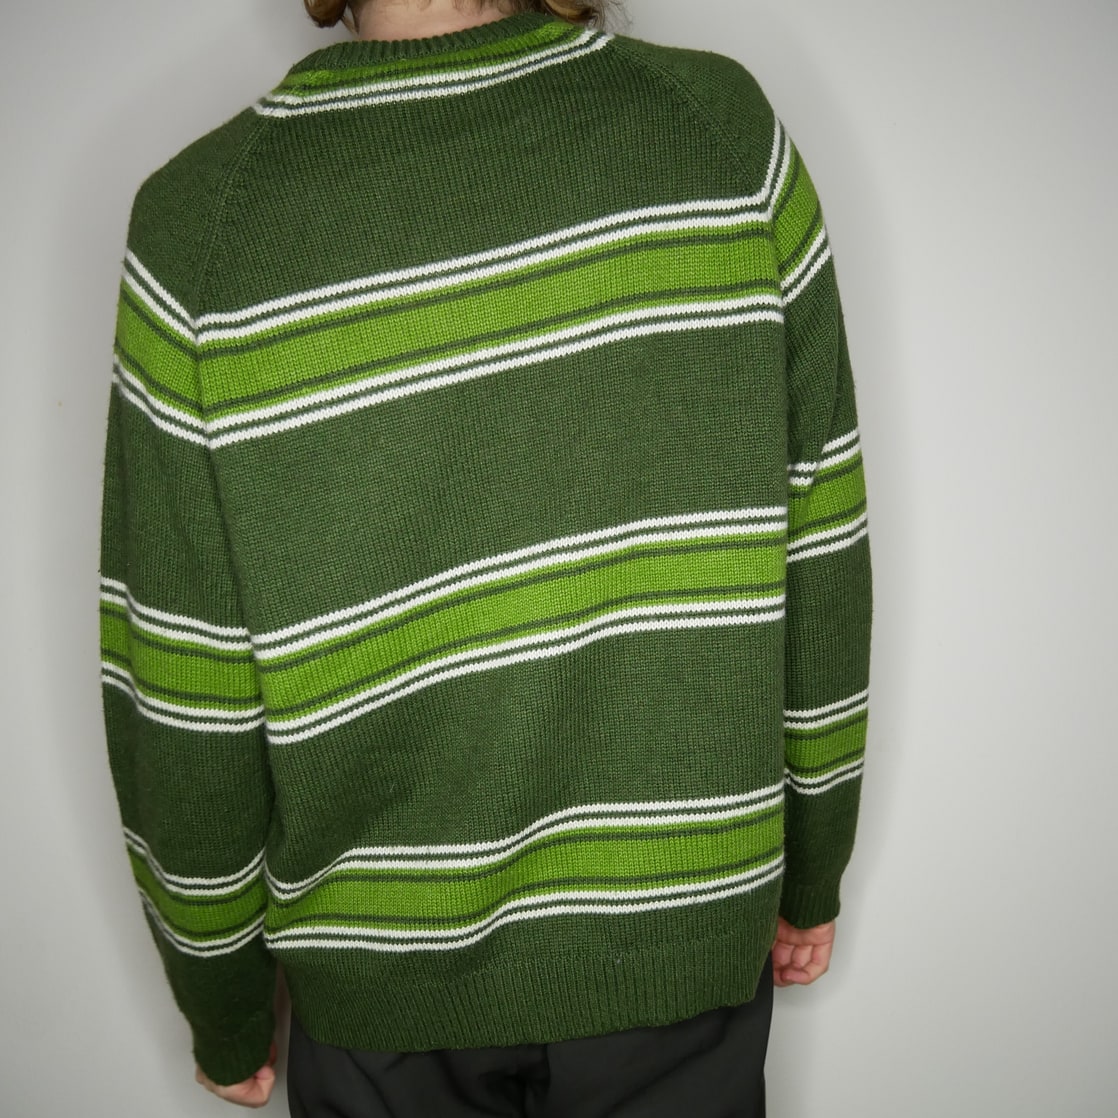 90s grunge striped oversized sweater 